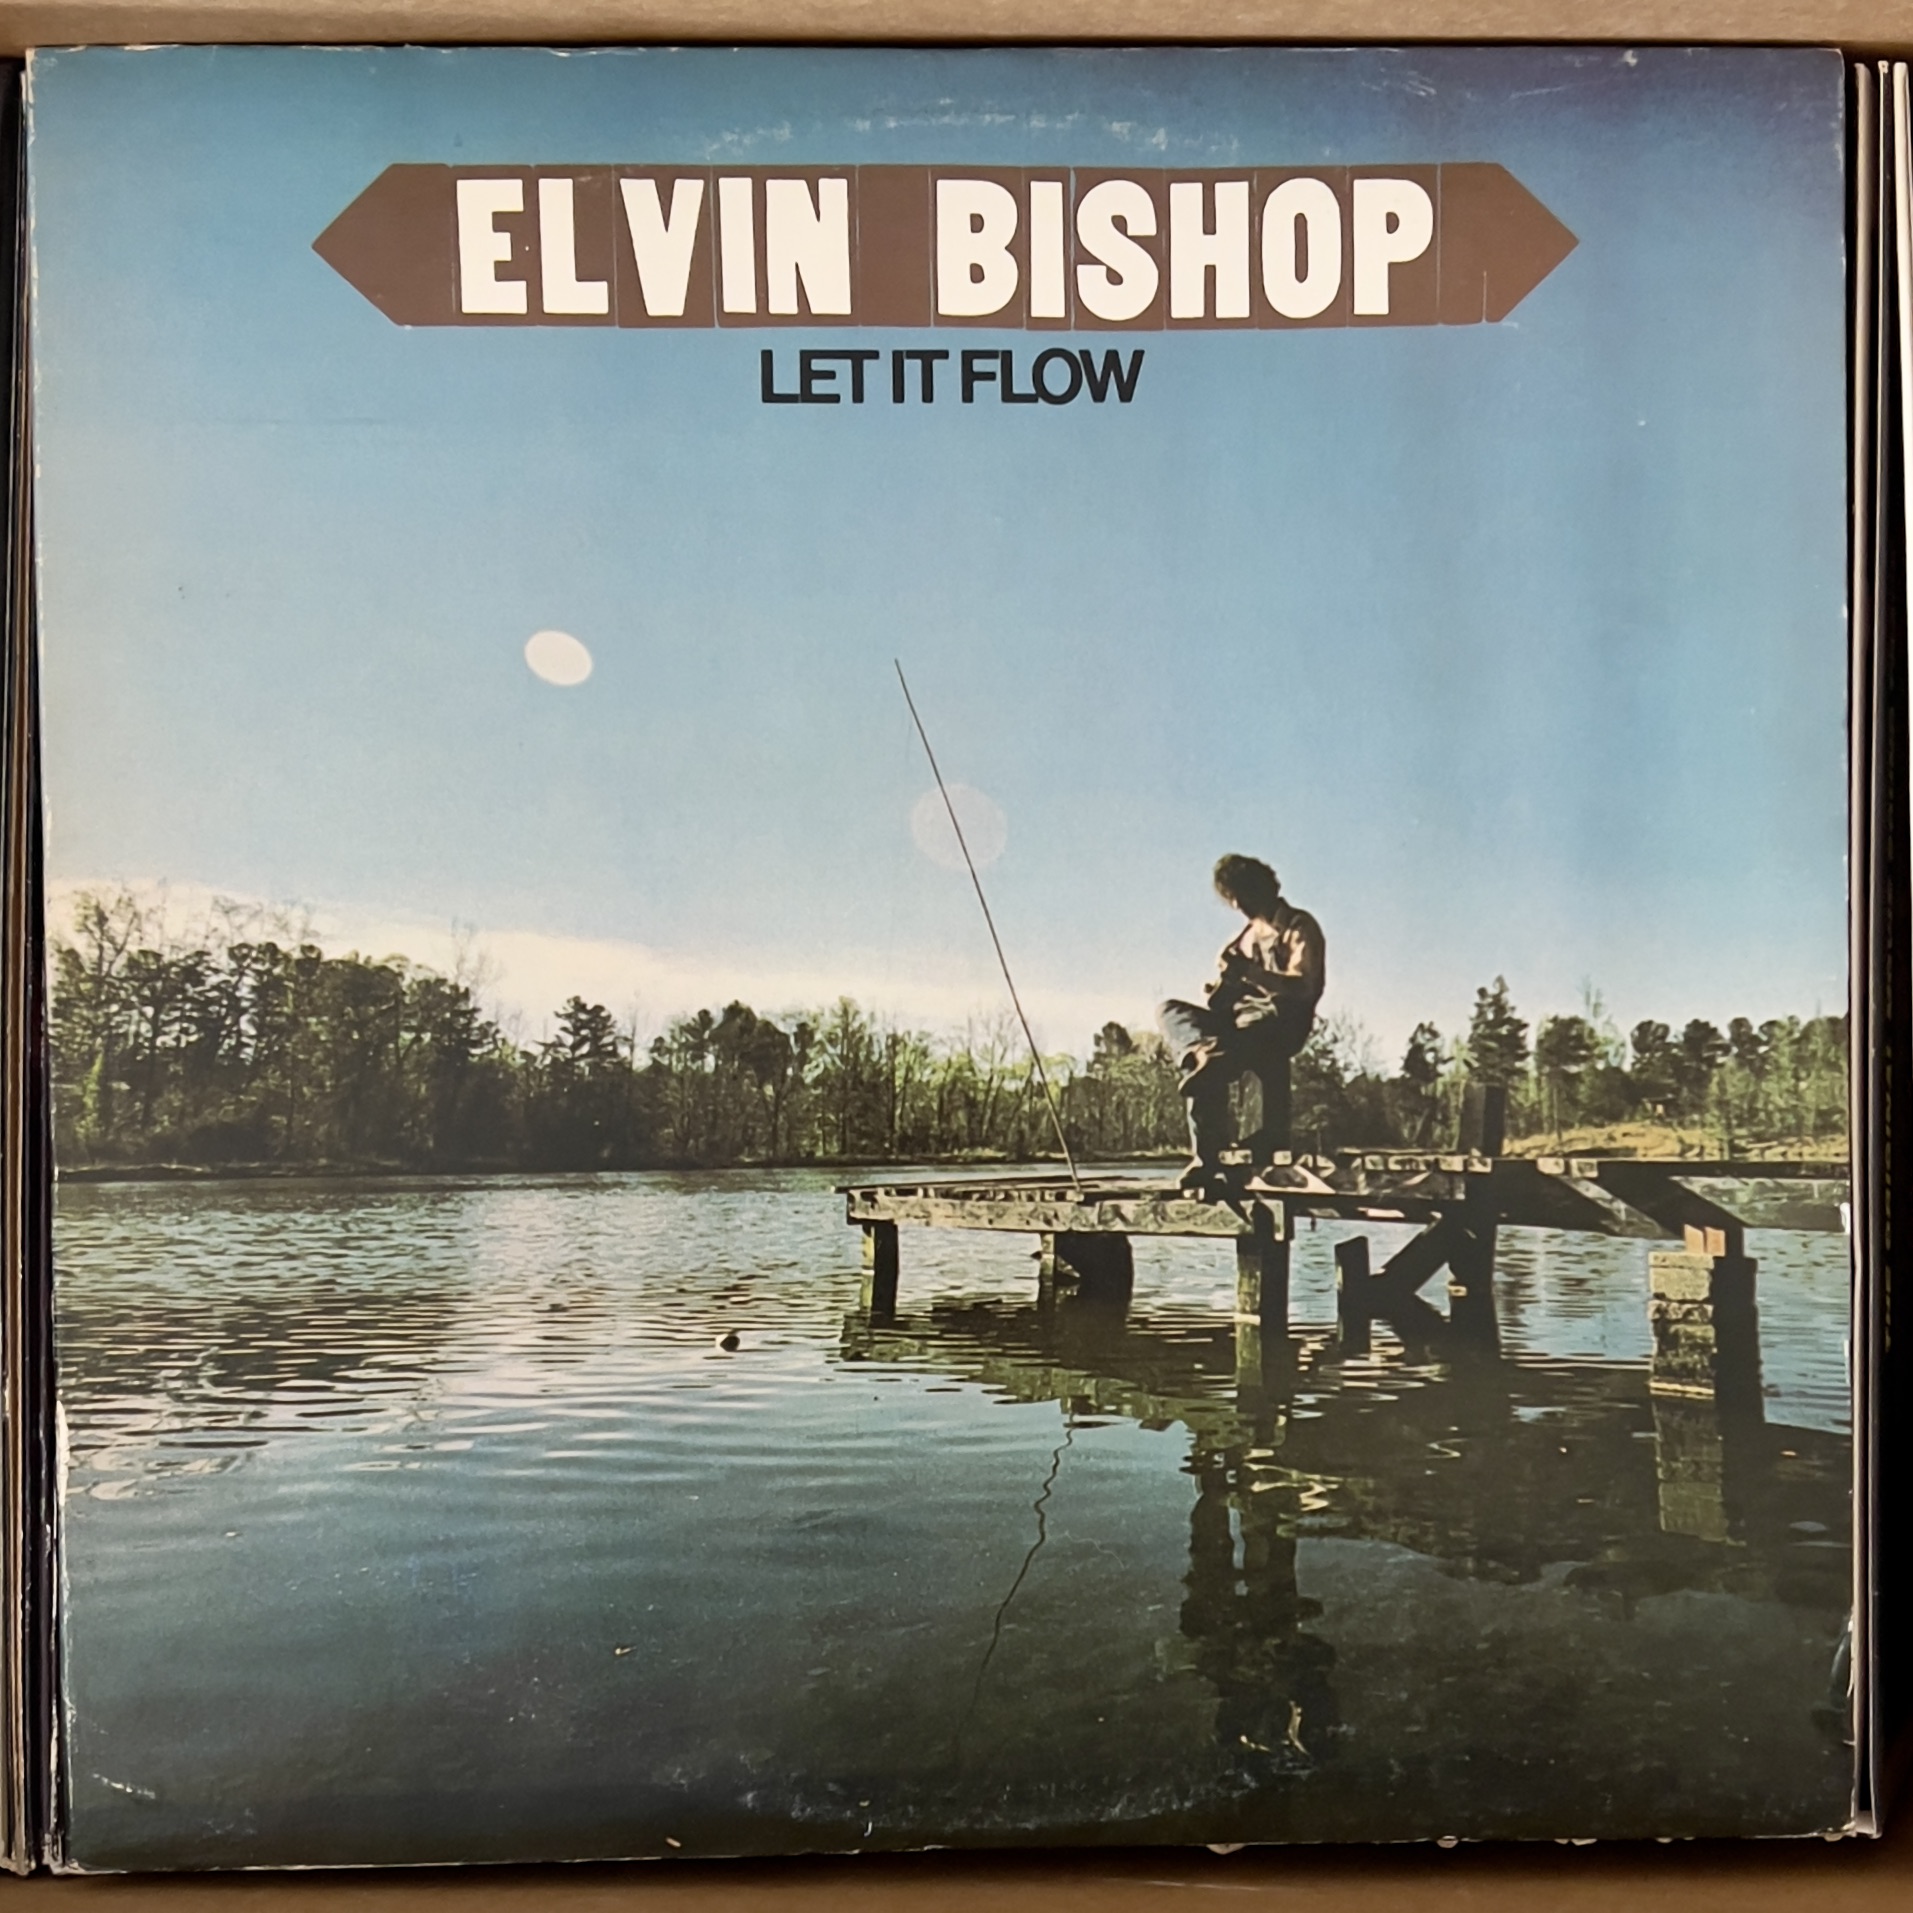 Let It Flow by Elvin Bishop